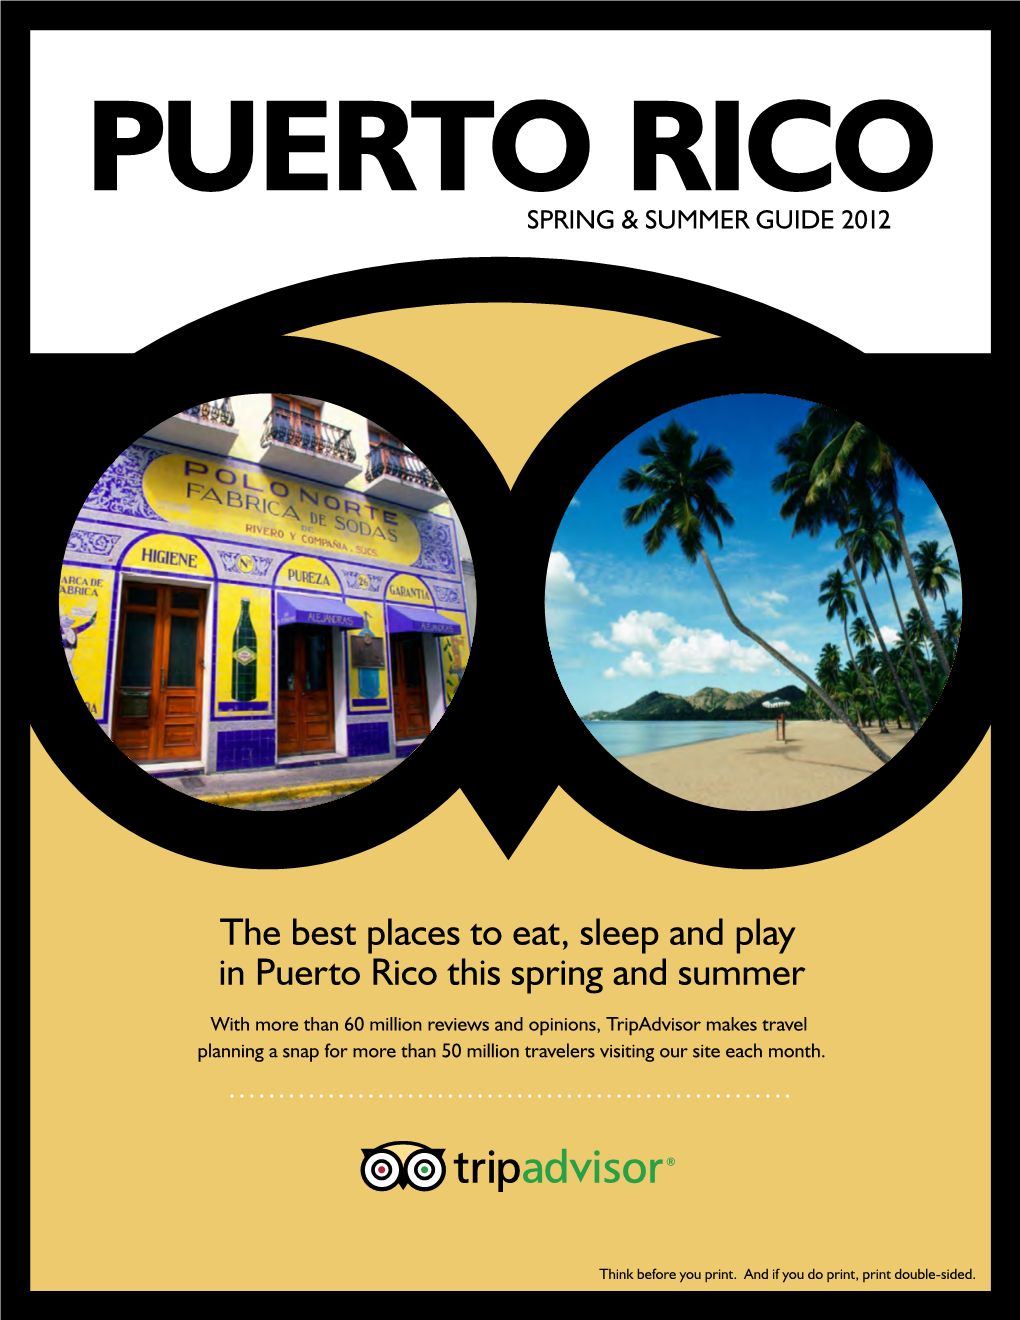 Puerto Rico Spring & Summer Guide 2012